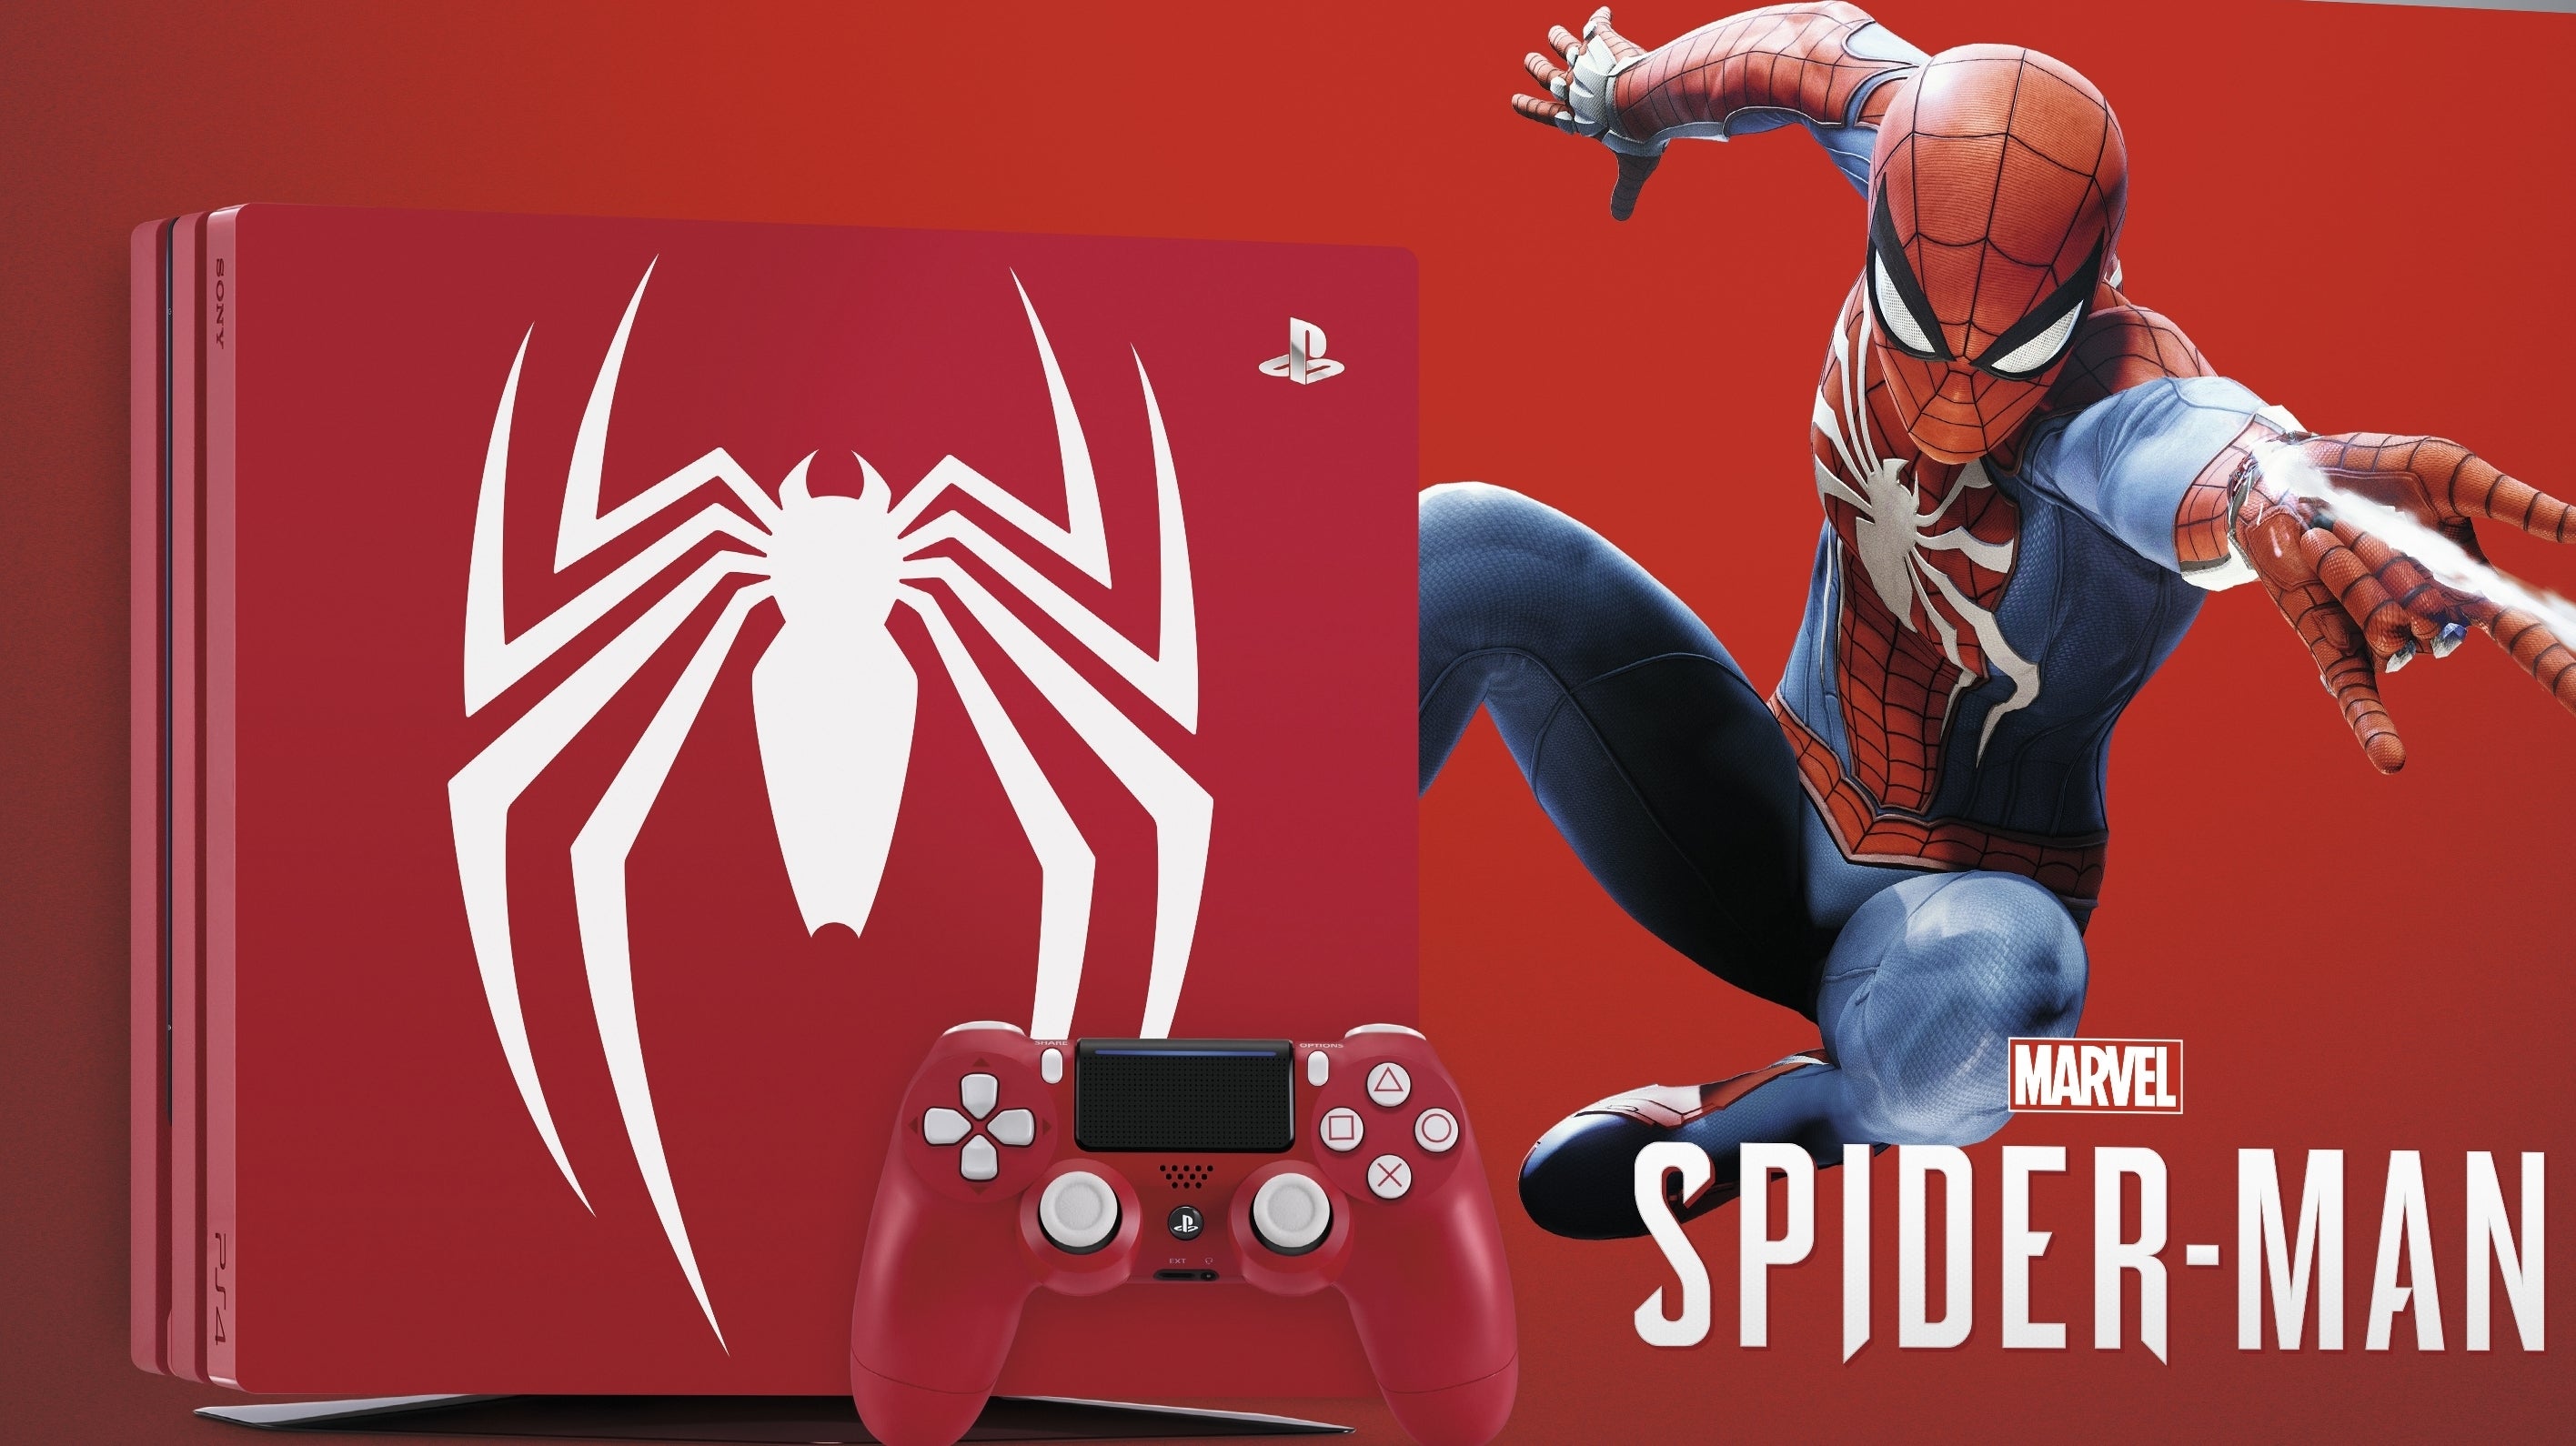 Паук на плейстейшен 4. Sony PLAYSTATION 4 Spider man. PLAYSTATION 4 Limited Edition человек паук. Ps4 Pro Spider man. Плейстейшен 4 Pro человек паук.